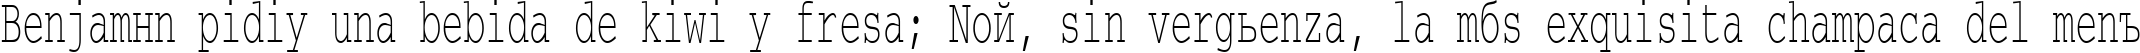 Пример написания шрифтом CourierCTT_55 текста на испанском